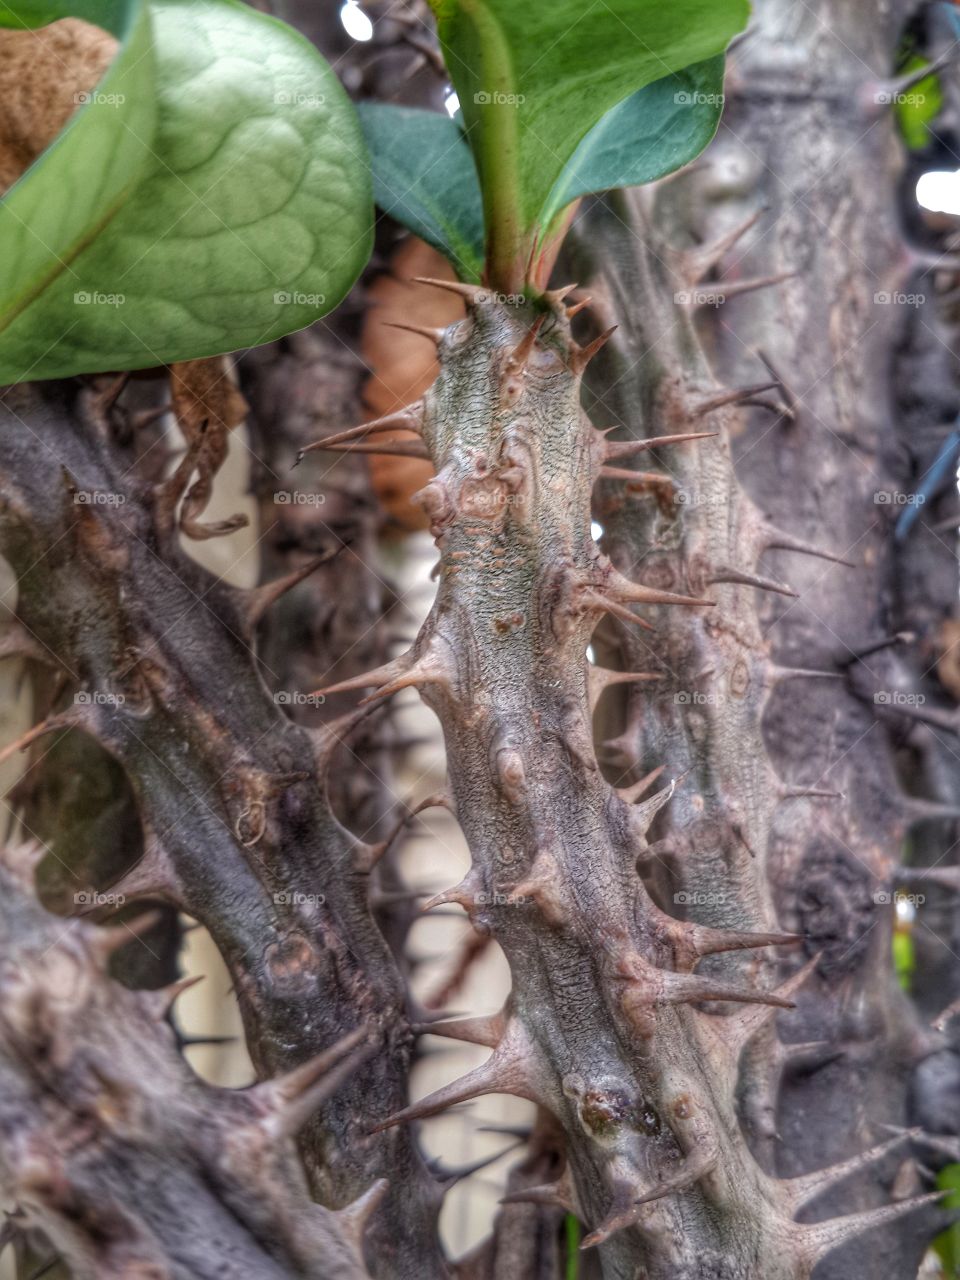 Thorny rod of an euphorbia plant.